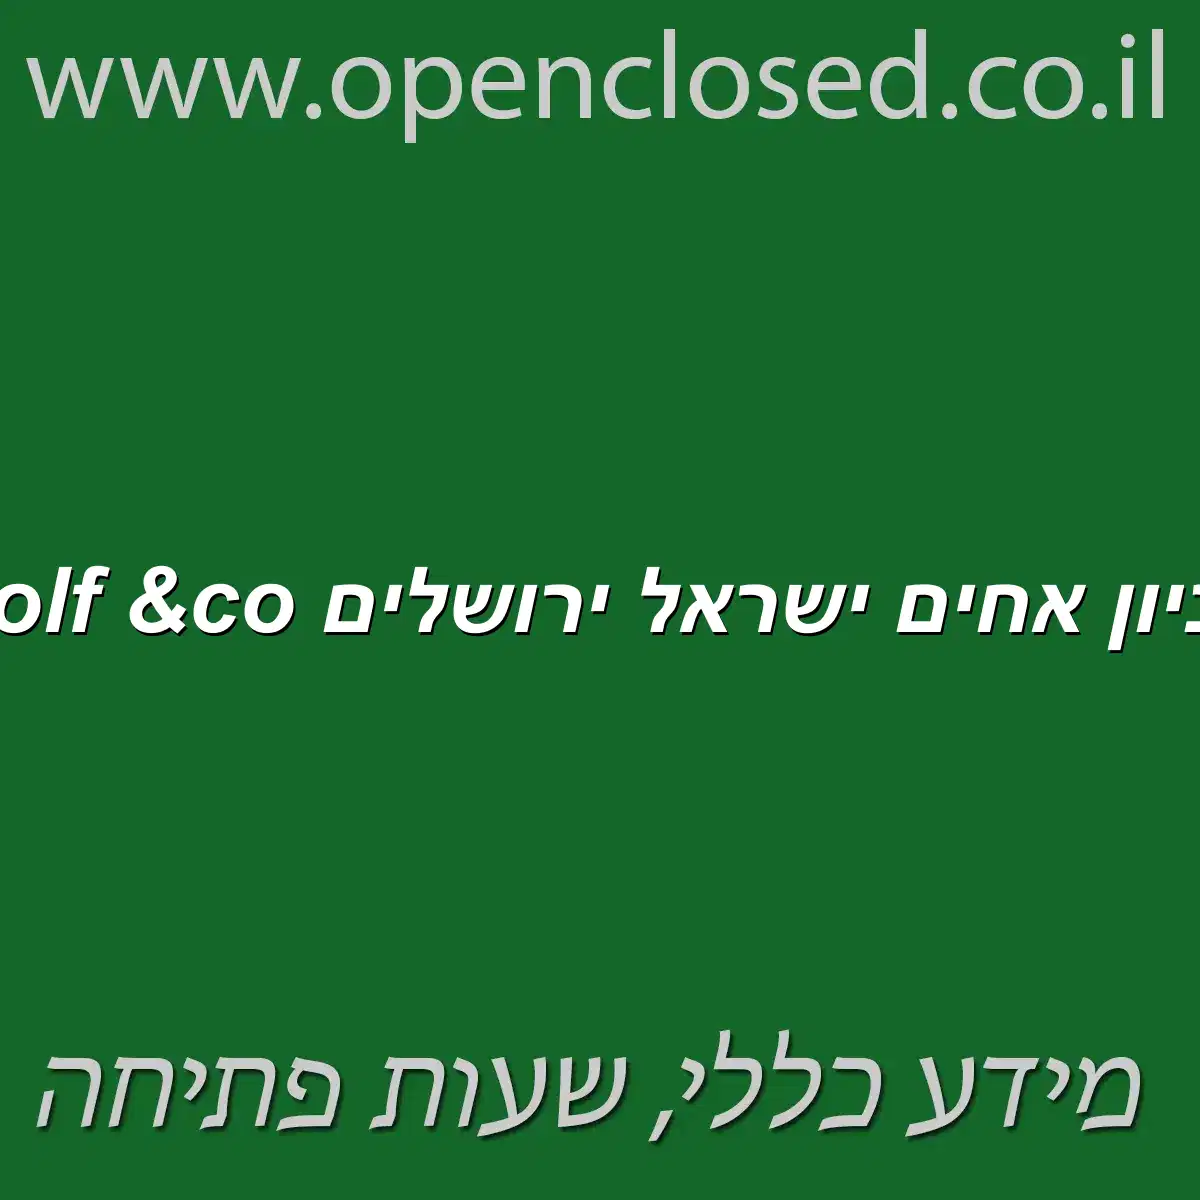 golf &co קניון אחים ישראל ירושלים